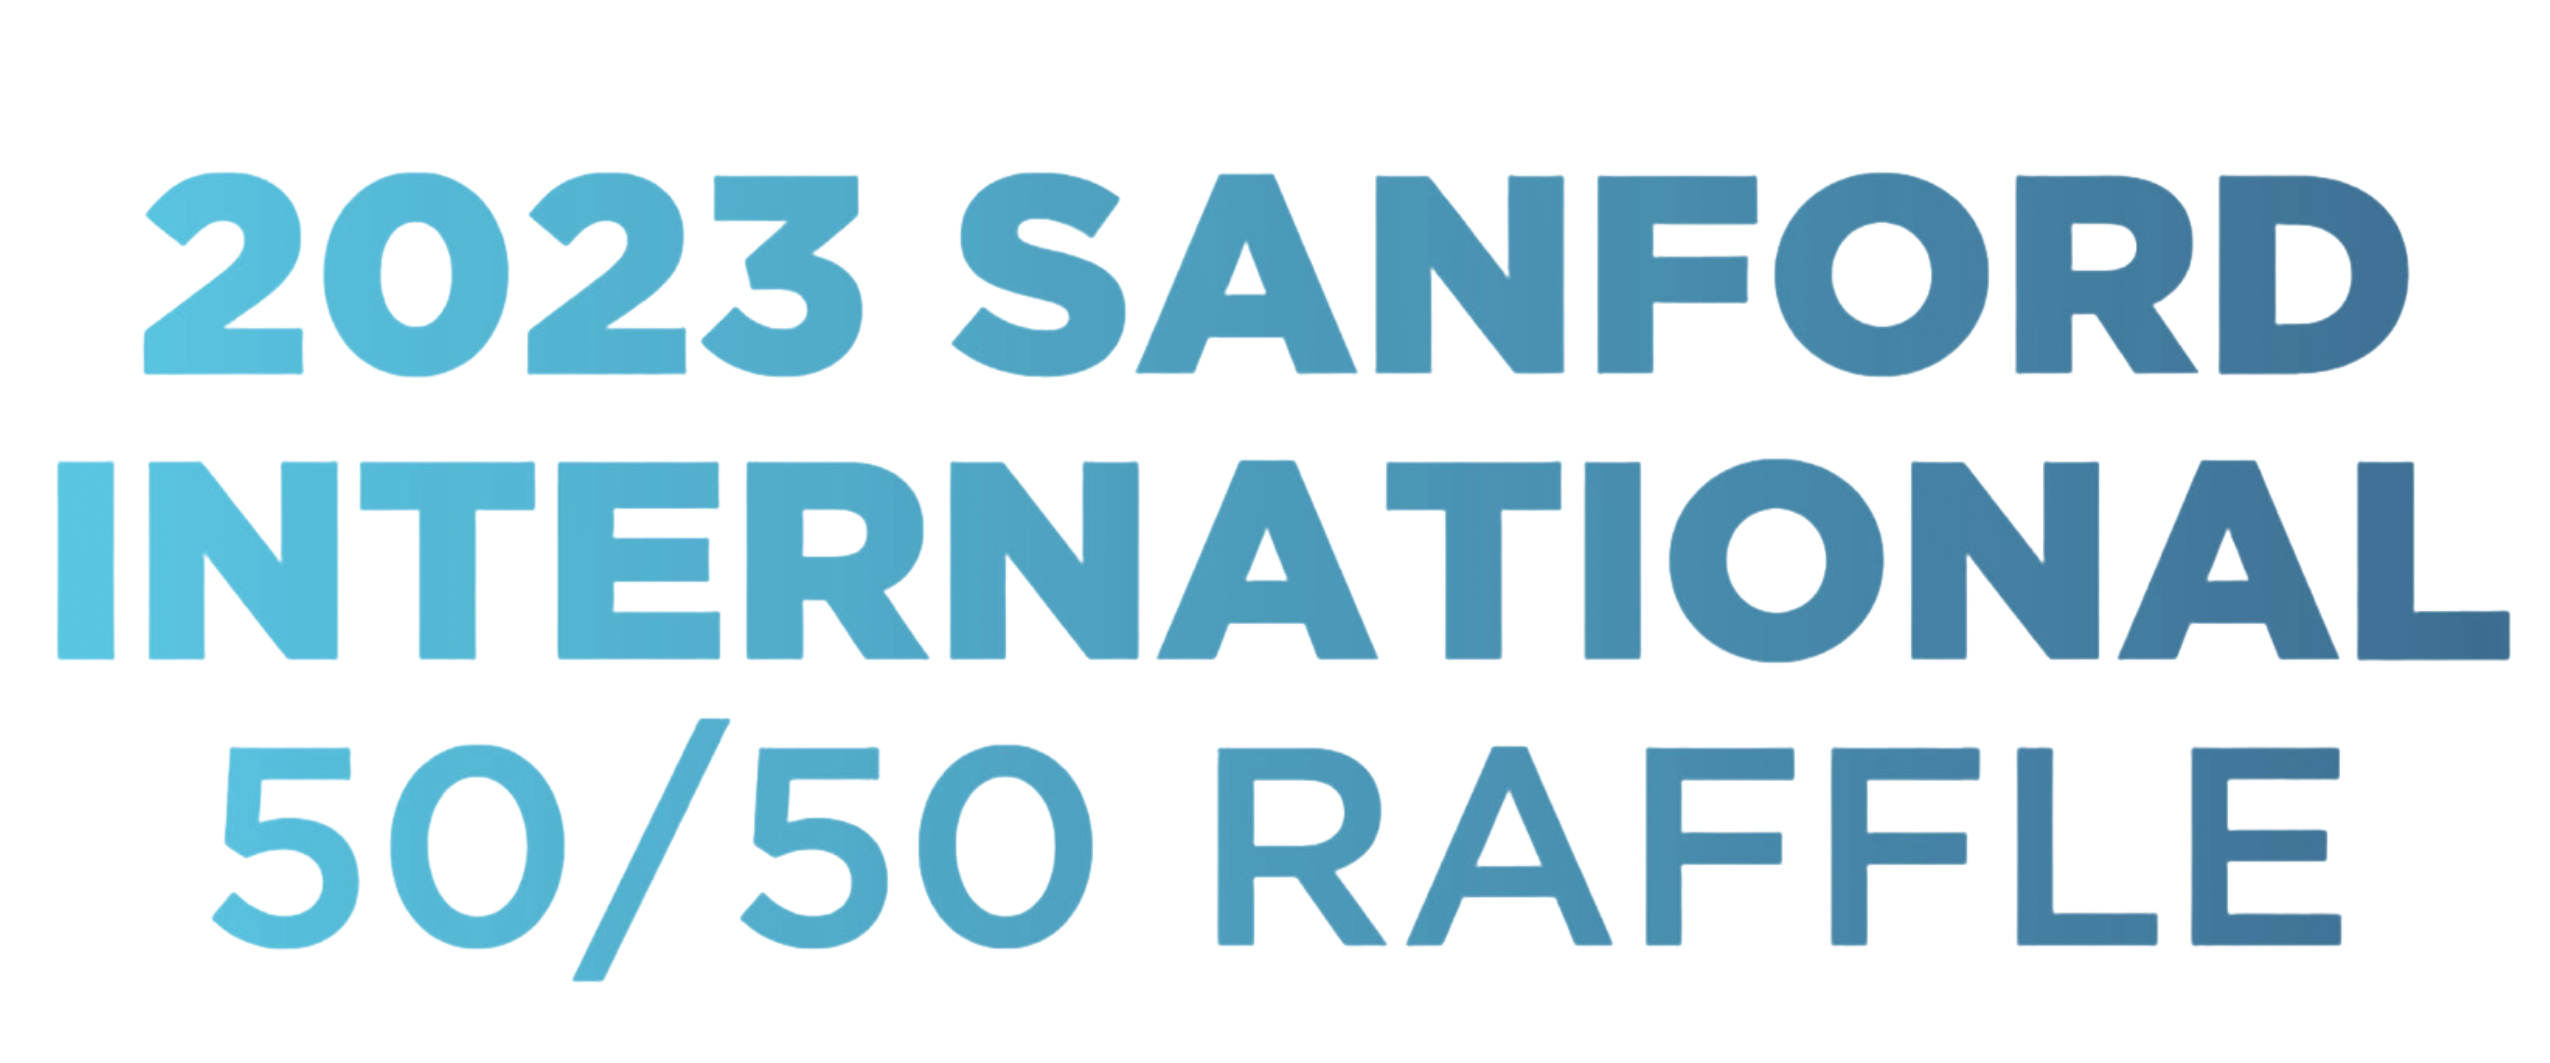 2023 Sanford International 50/50 Raffle Campaign